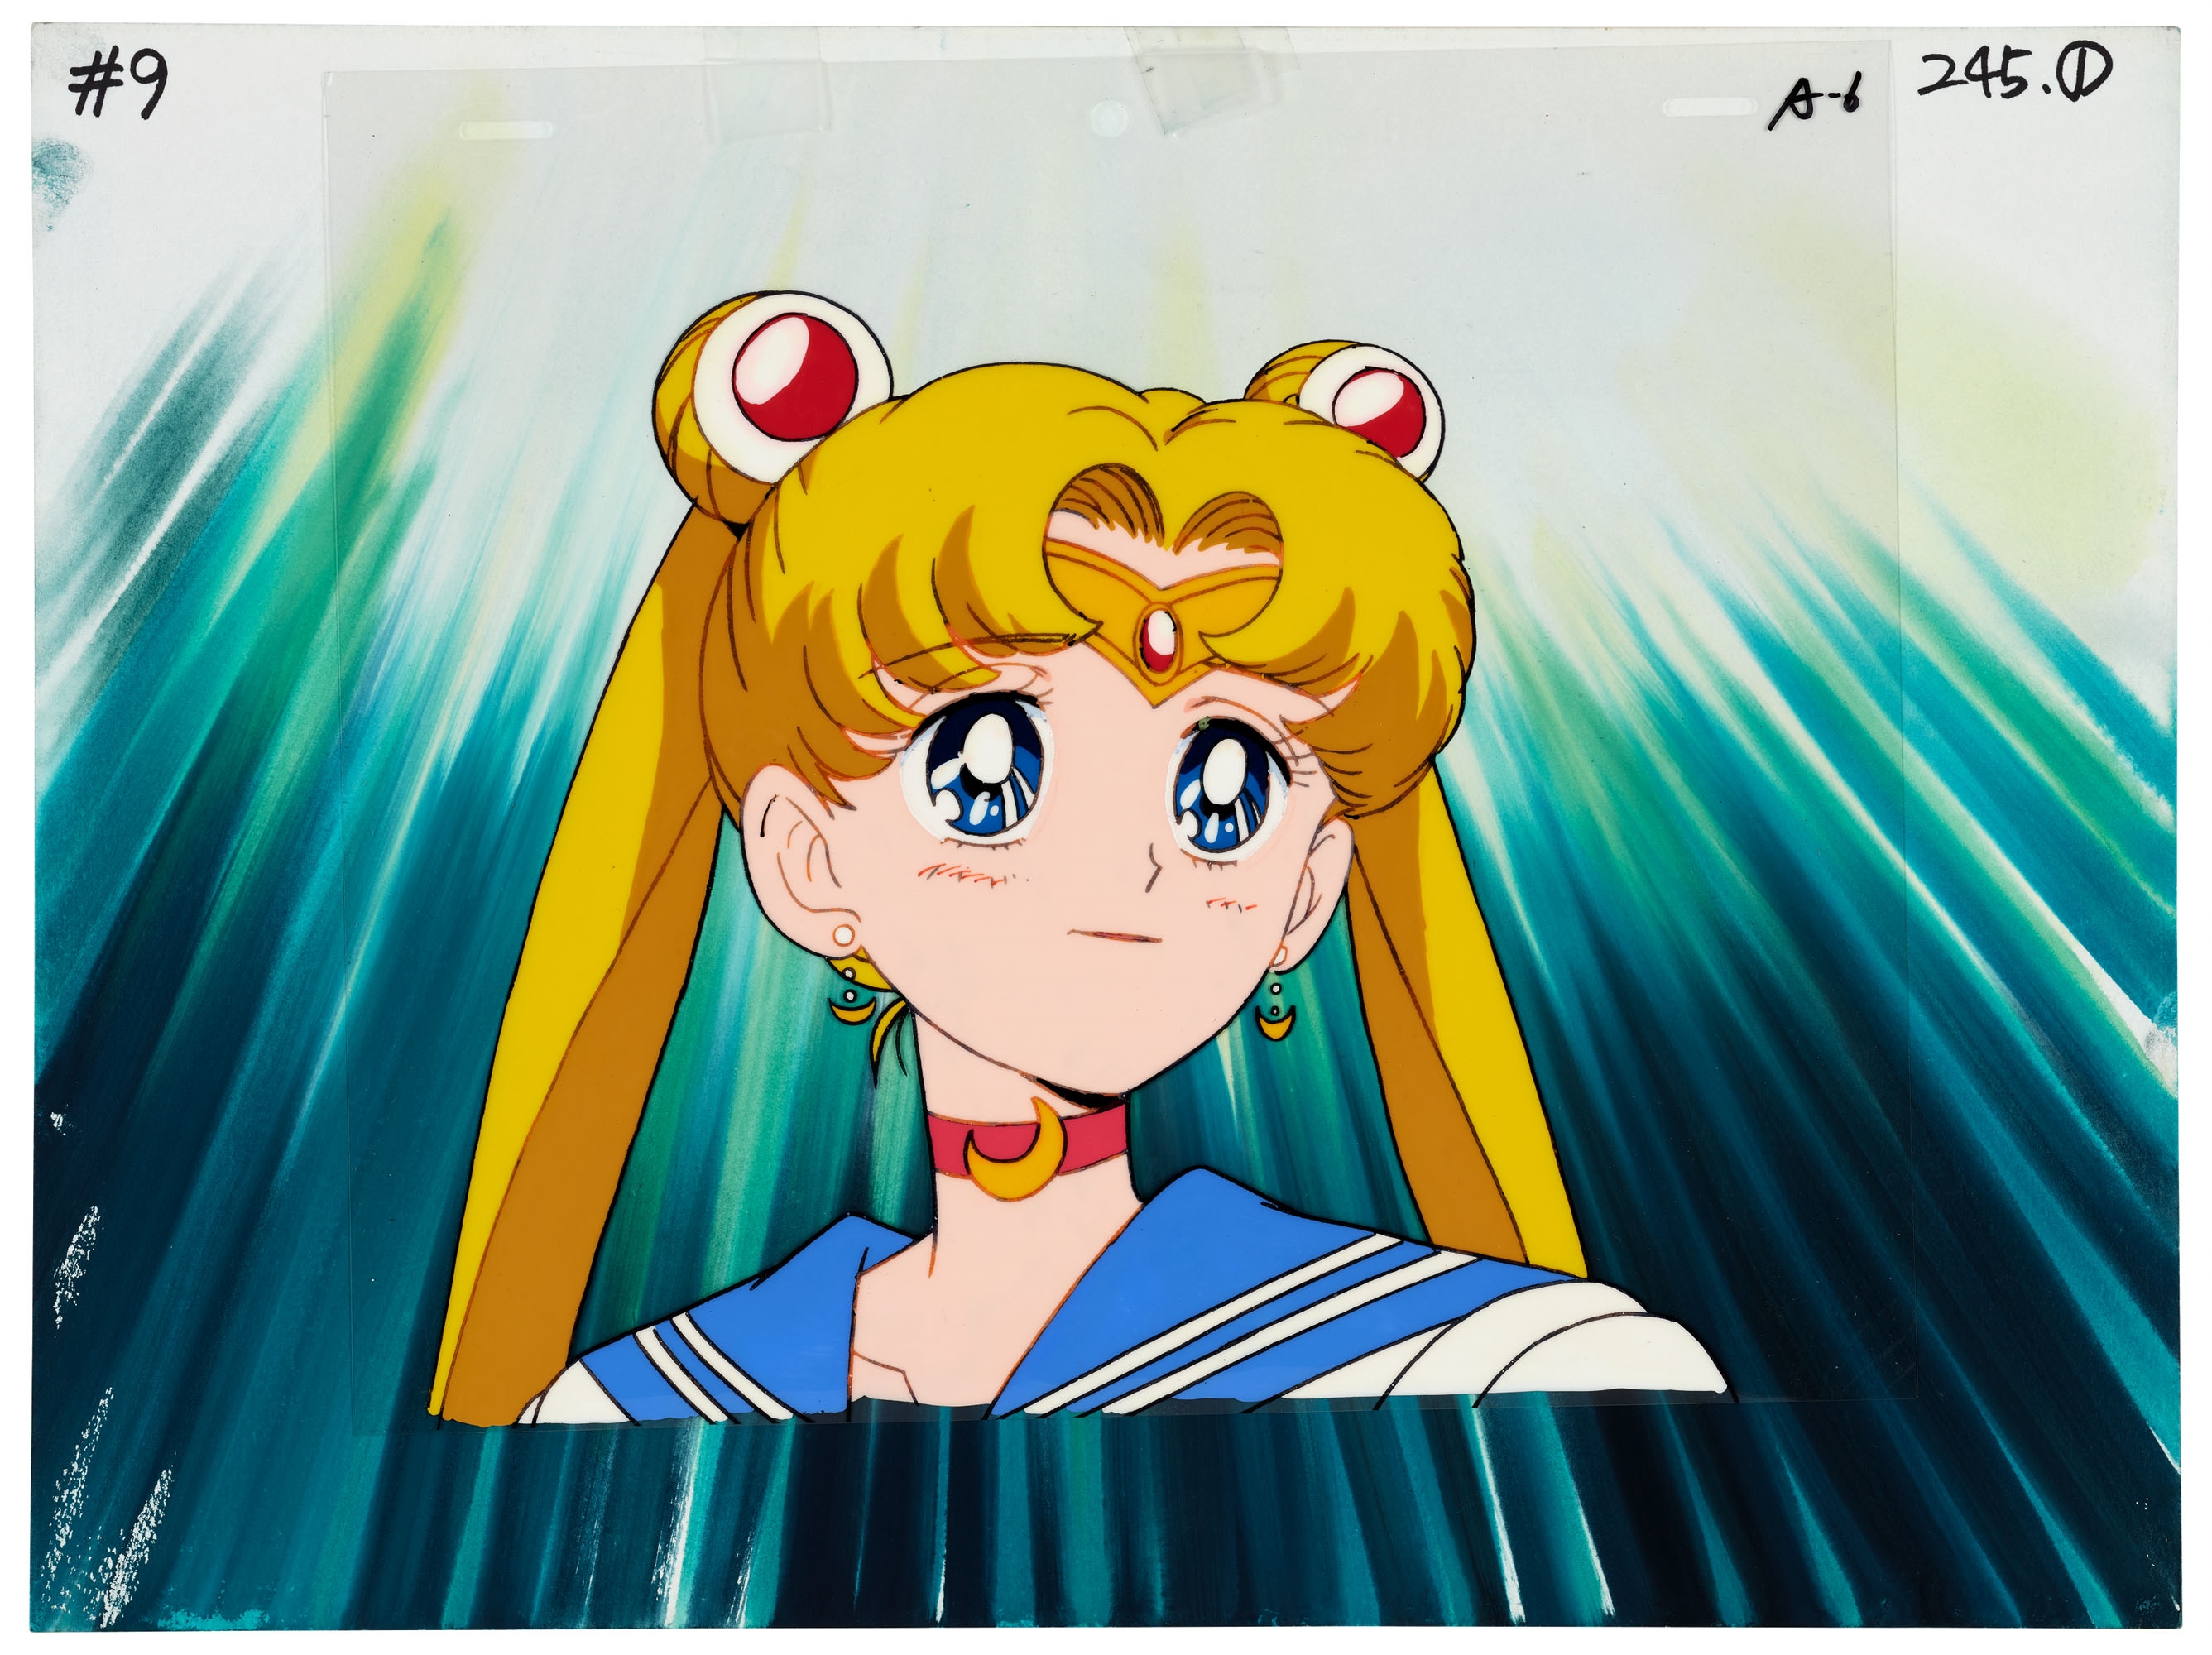 Sailor Moon by Toei Animation